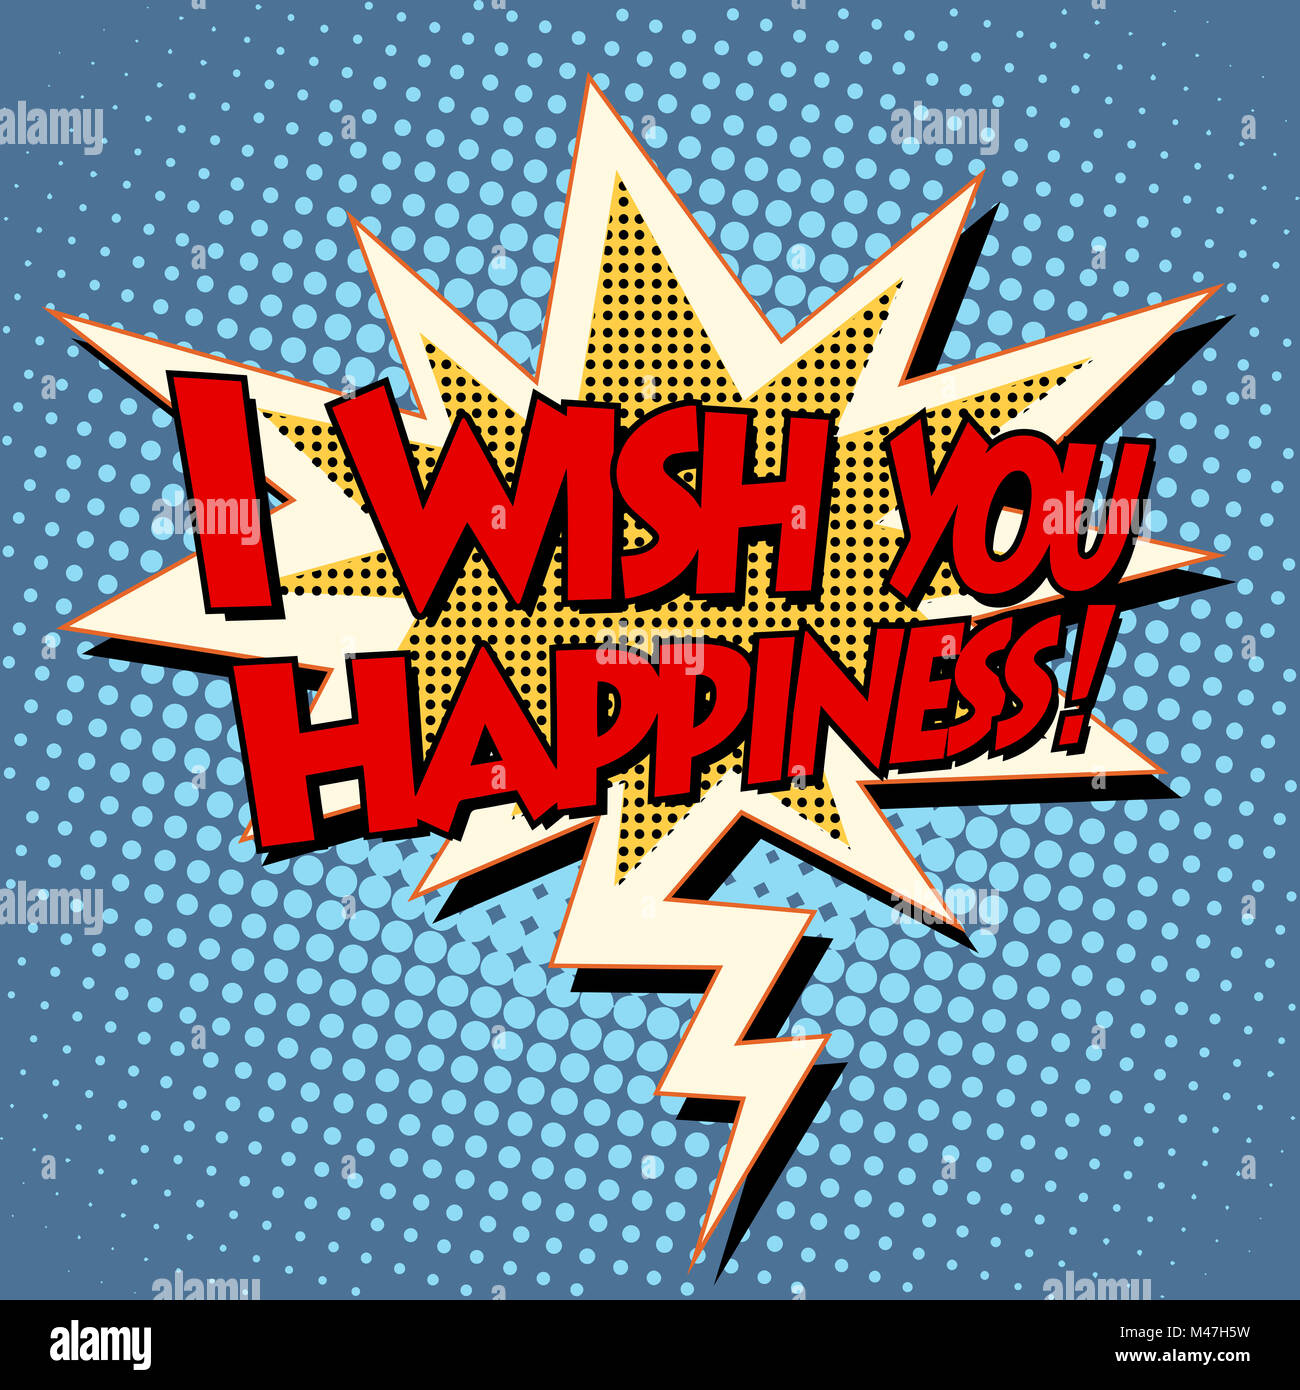 i wish you happiness explosion bubble retro comic book text Stock Photo